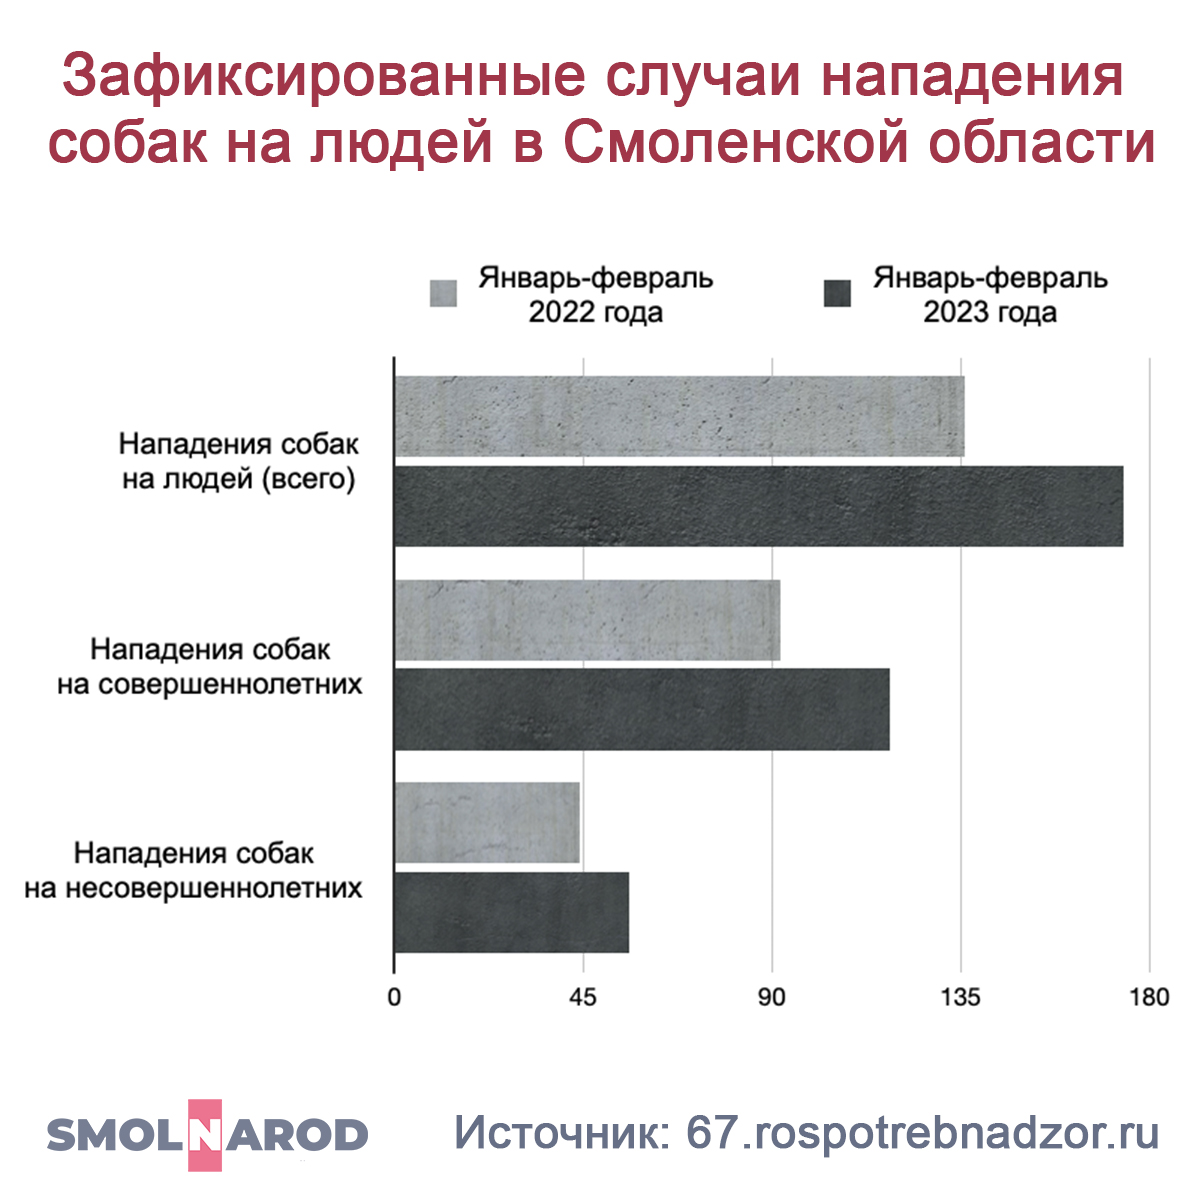 Статистика нападений людей на людей. Статистика нападения собак на людей в России.